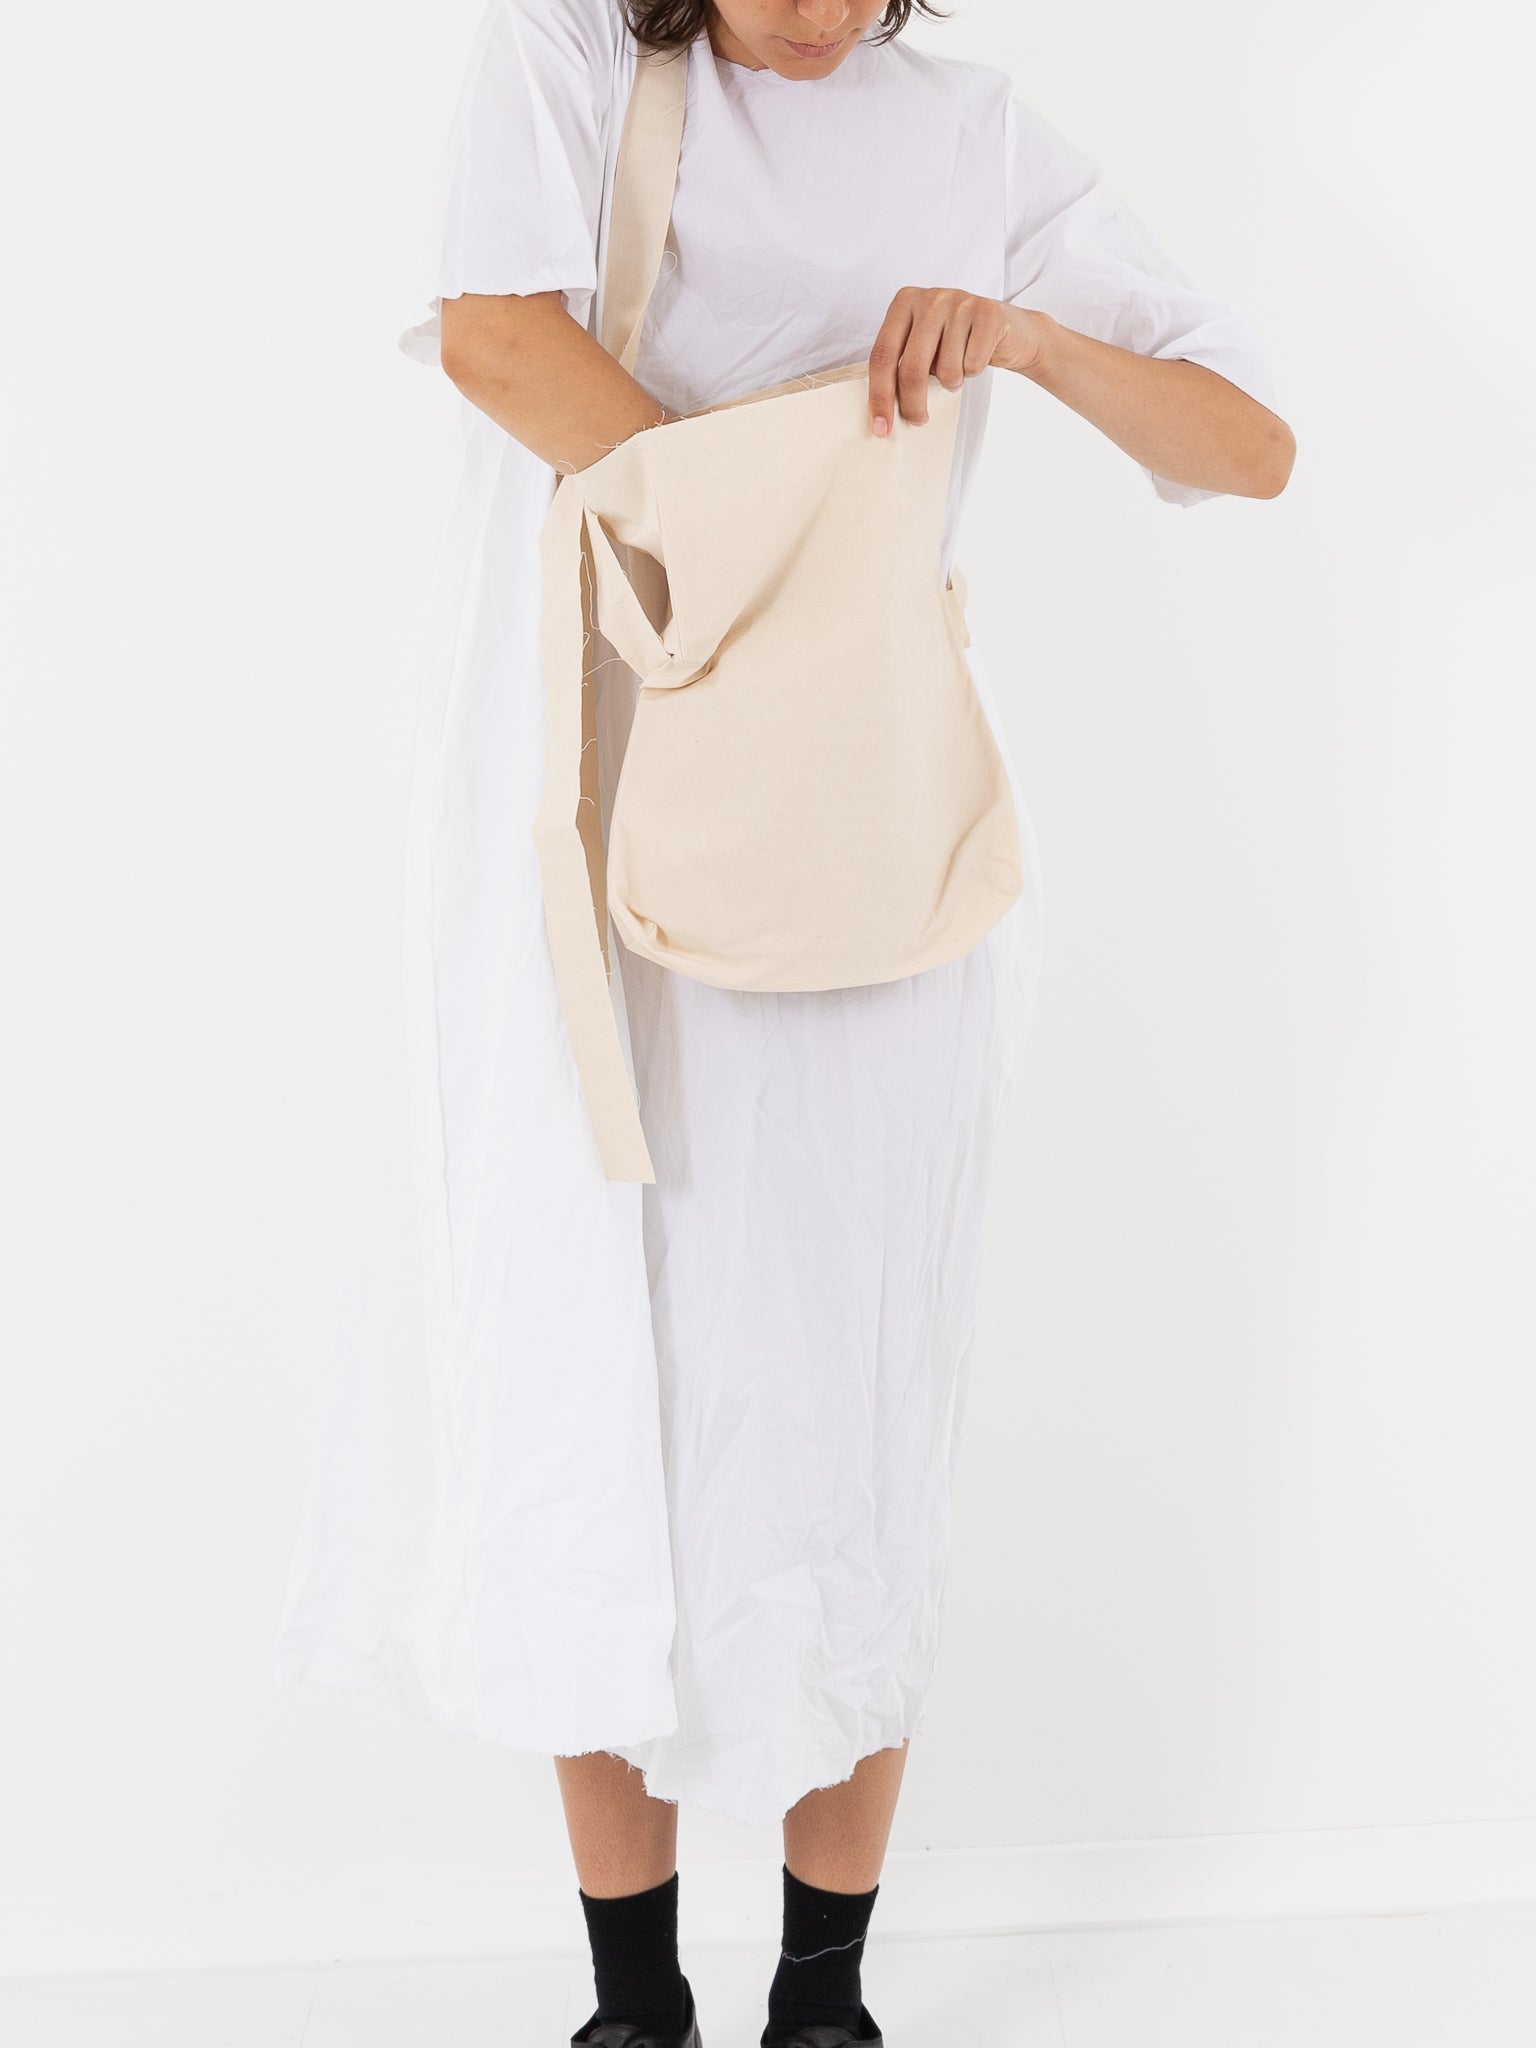 SCHA Small Shoulder Bag, Ecru - Worthwhile, Inc.